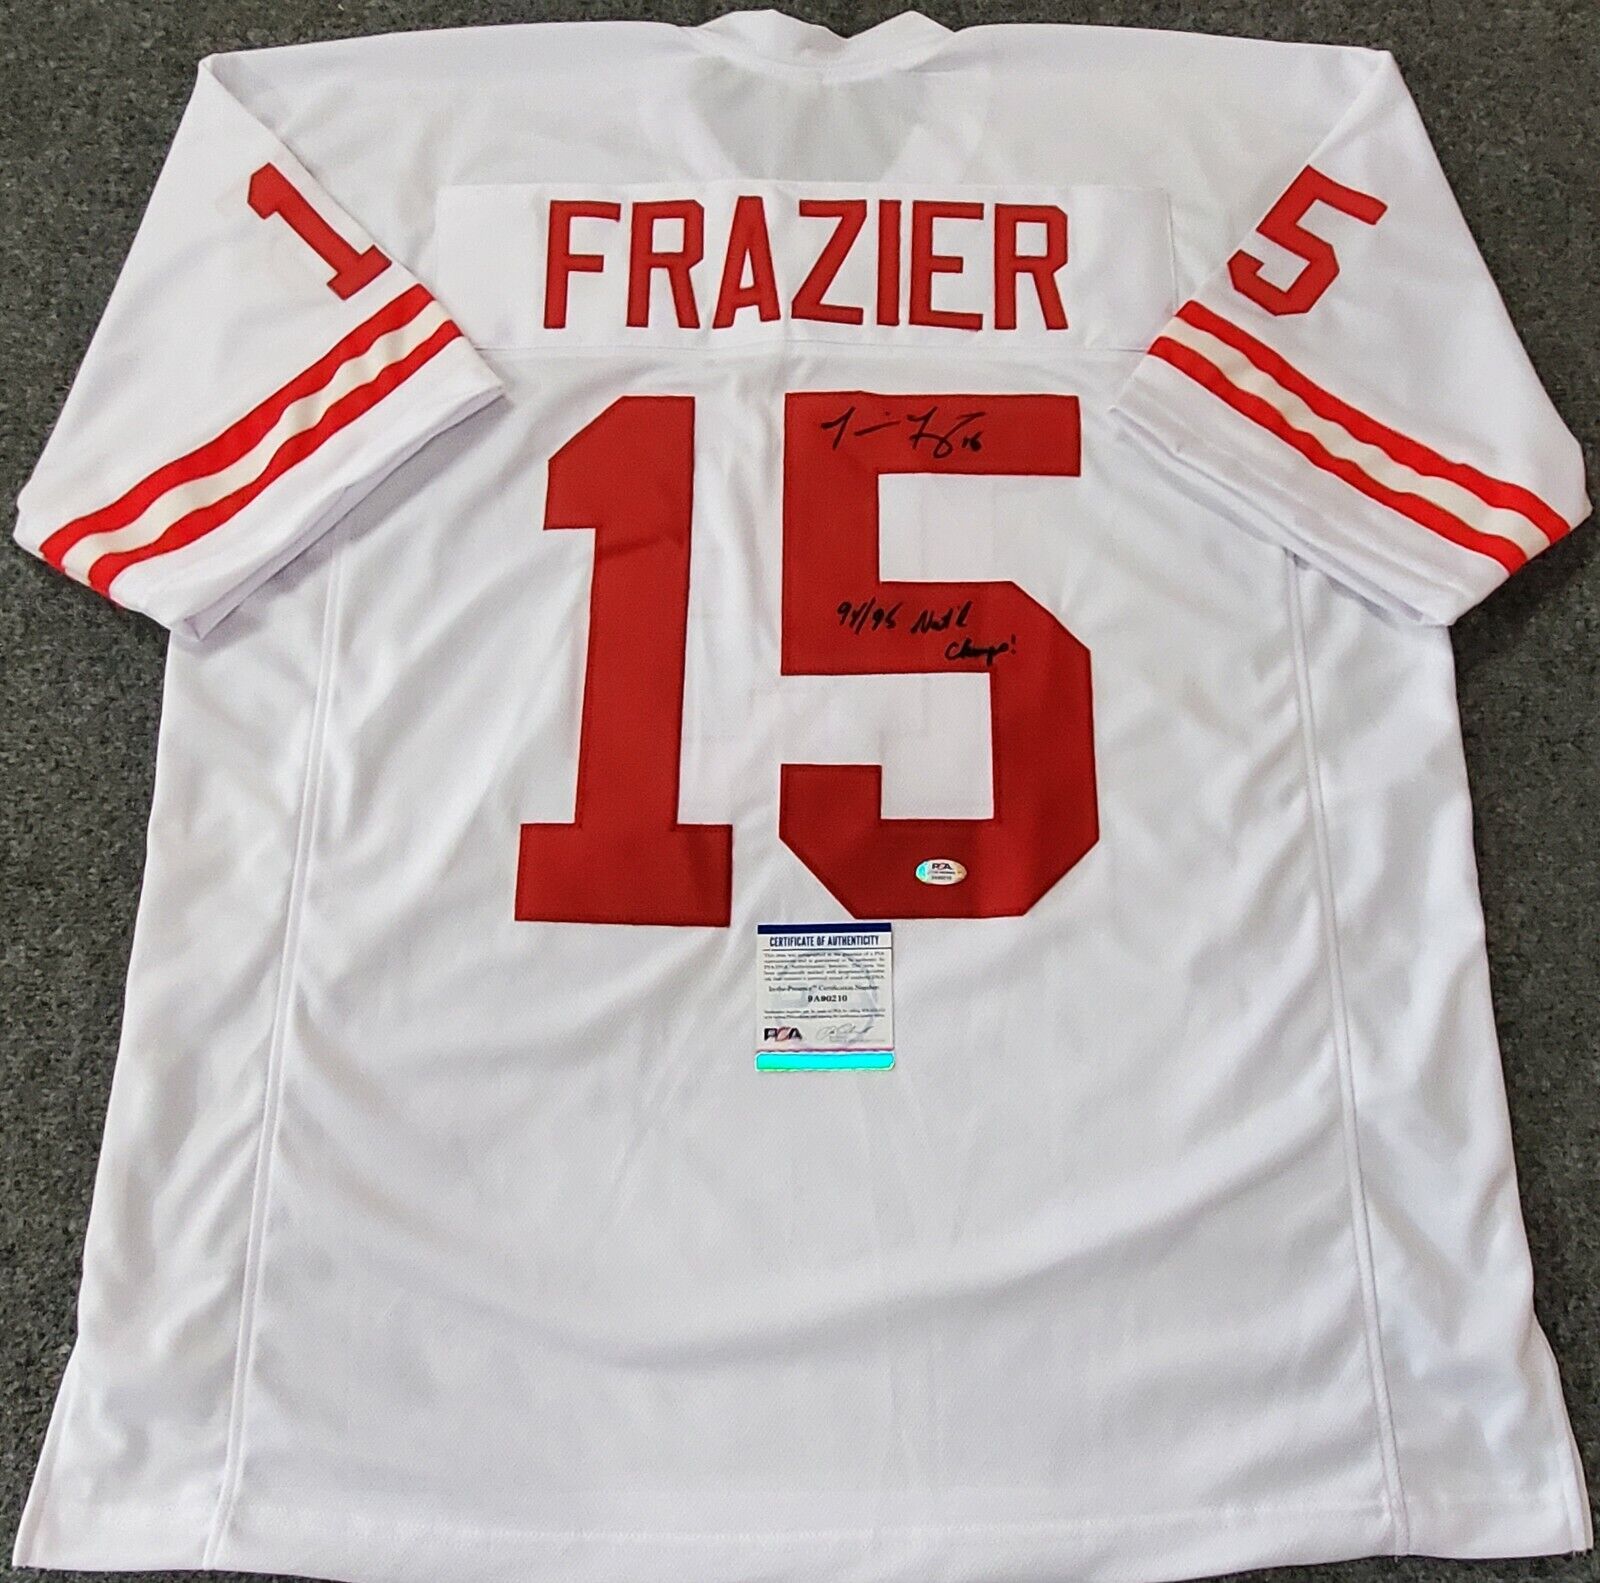 MVP Authentics Nebraska Cornhuskers Tommie Frazier Autographed Inscribed Jersey Psa Coa 107.10 sports jersey framing , jersey framing